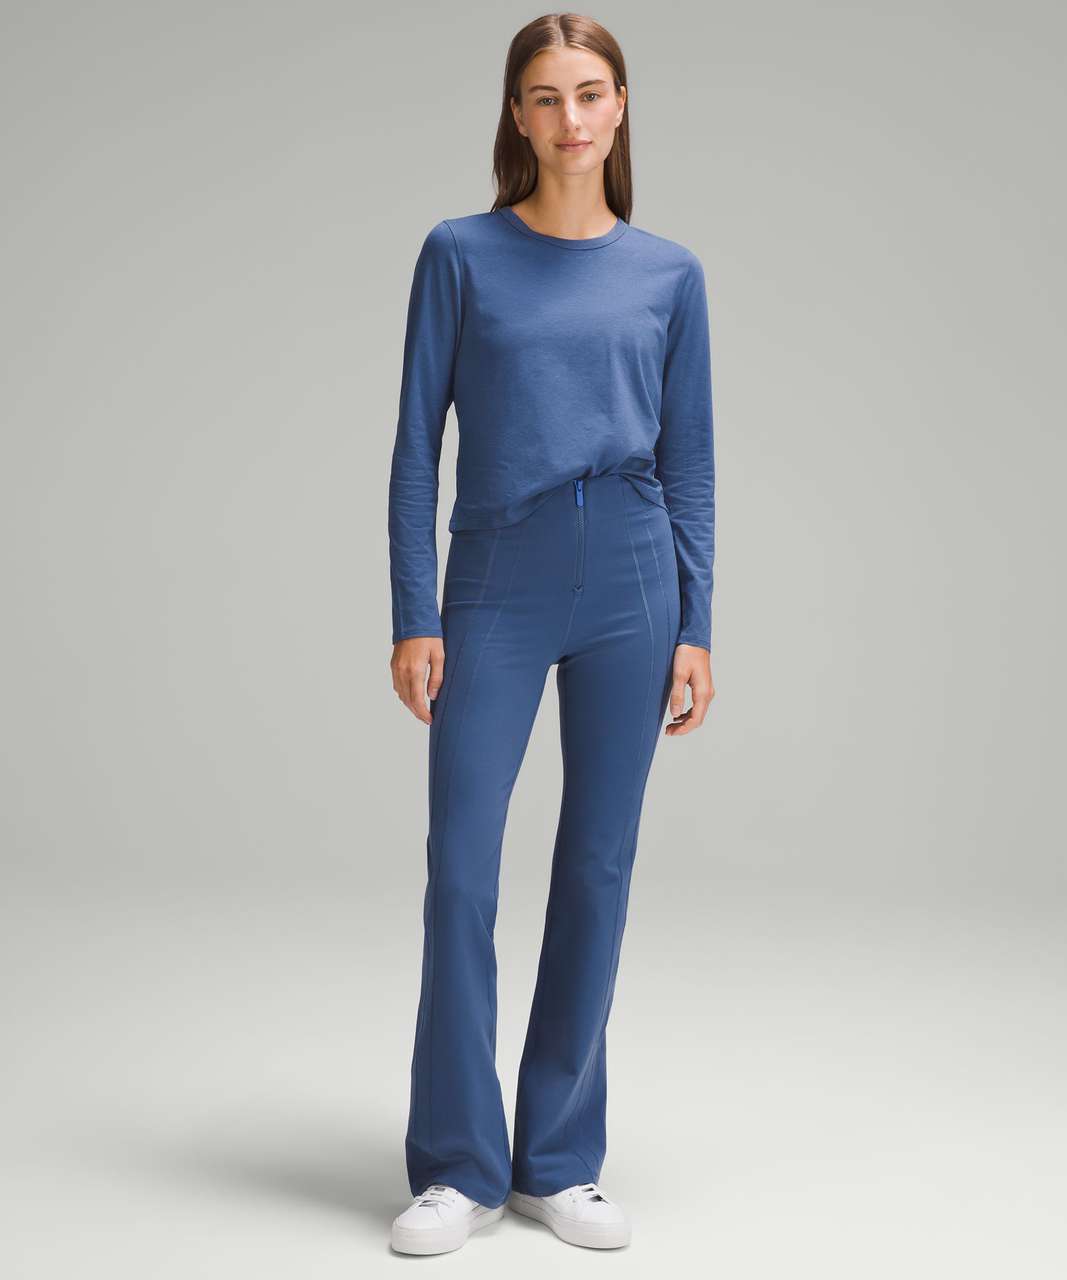 Lululemon Classic-Fit Cotton-Blend Long-Sleeve Shirt - Pitch Blue